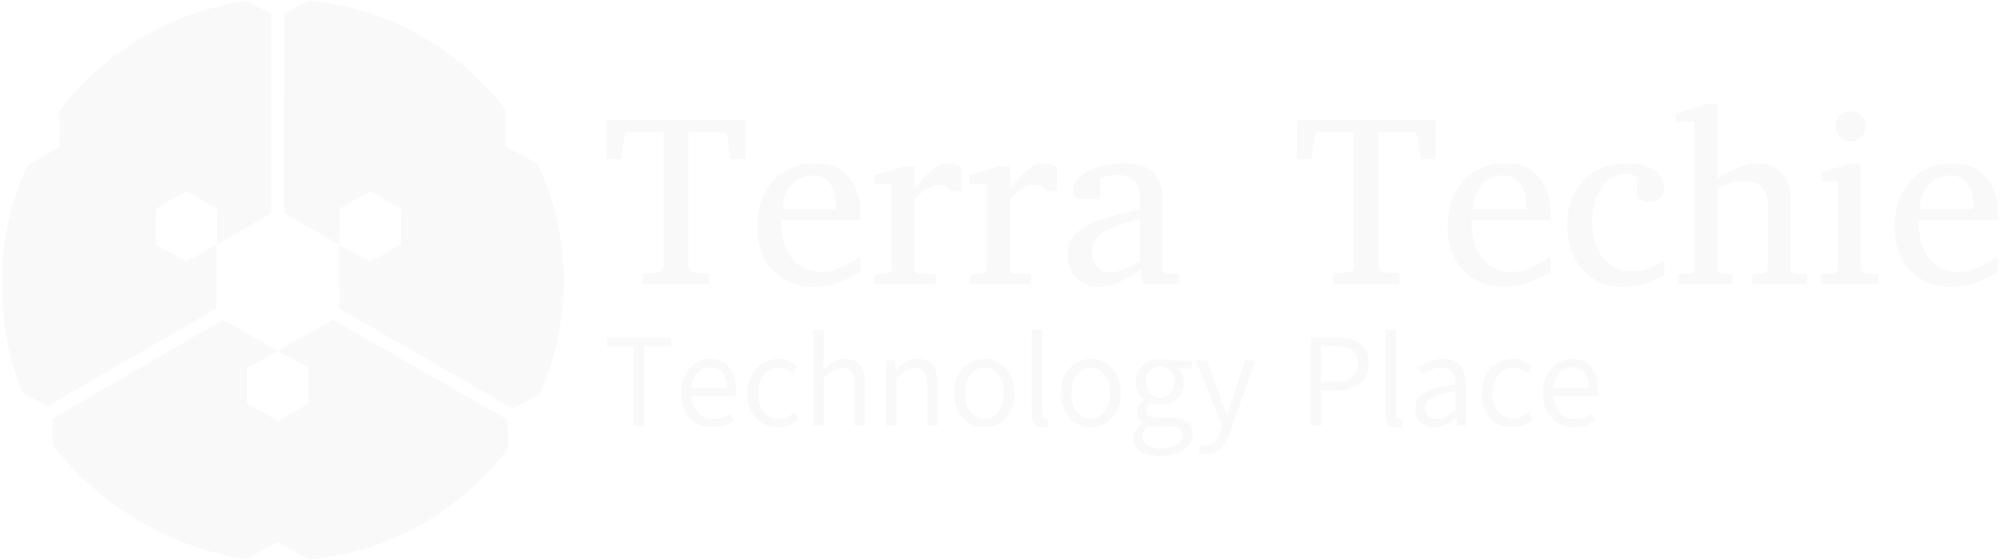 Terra Techie